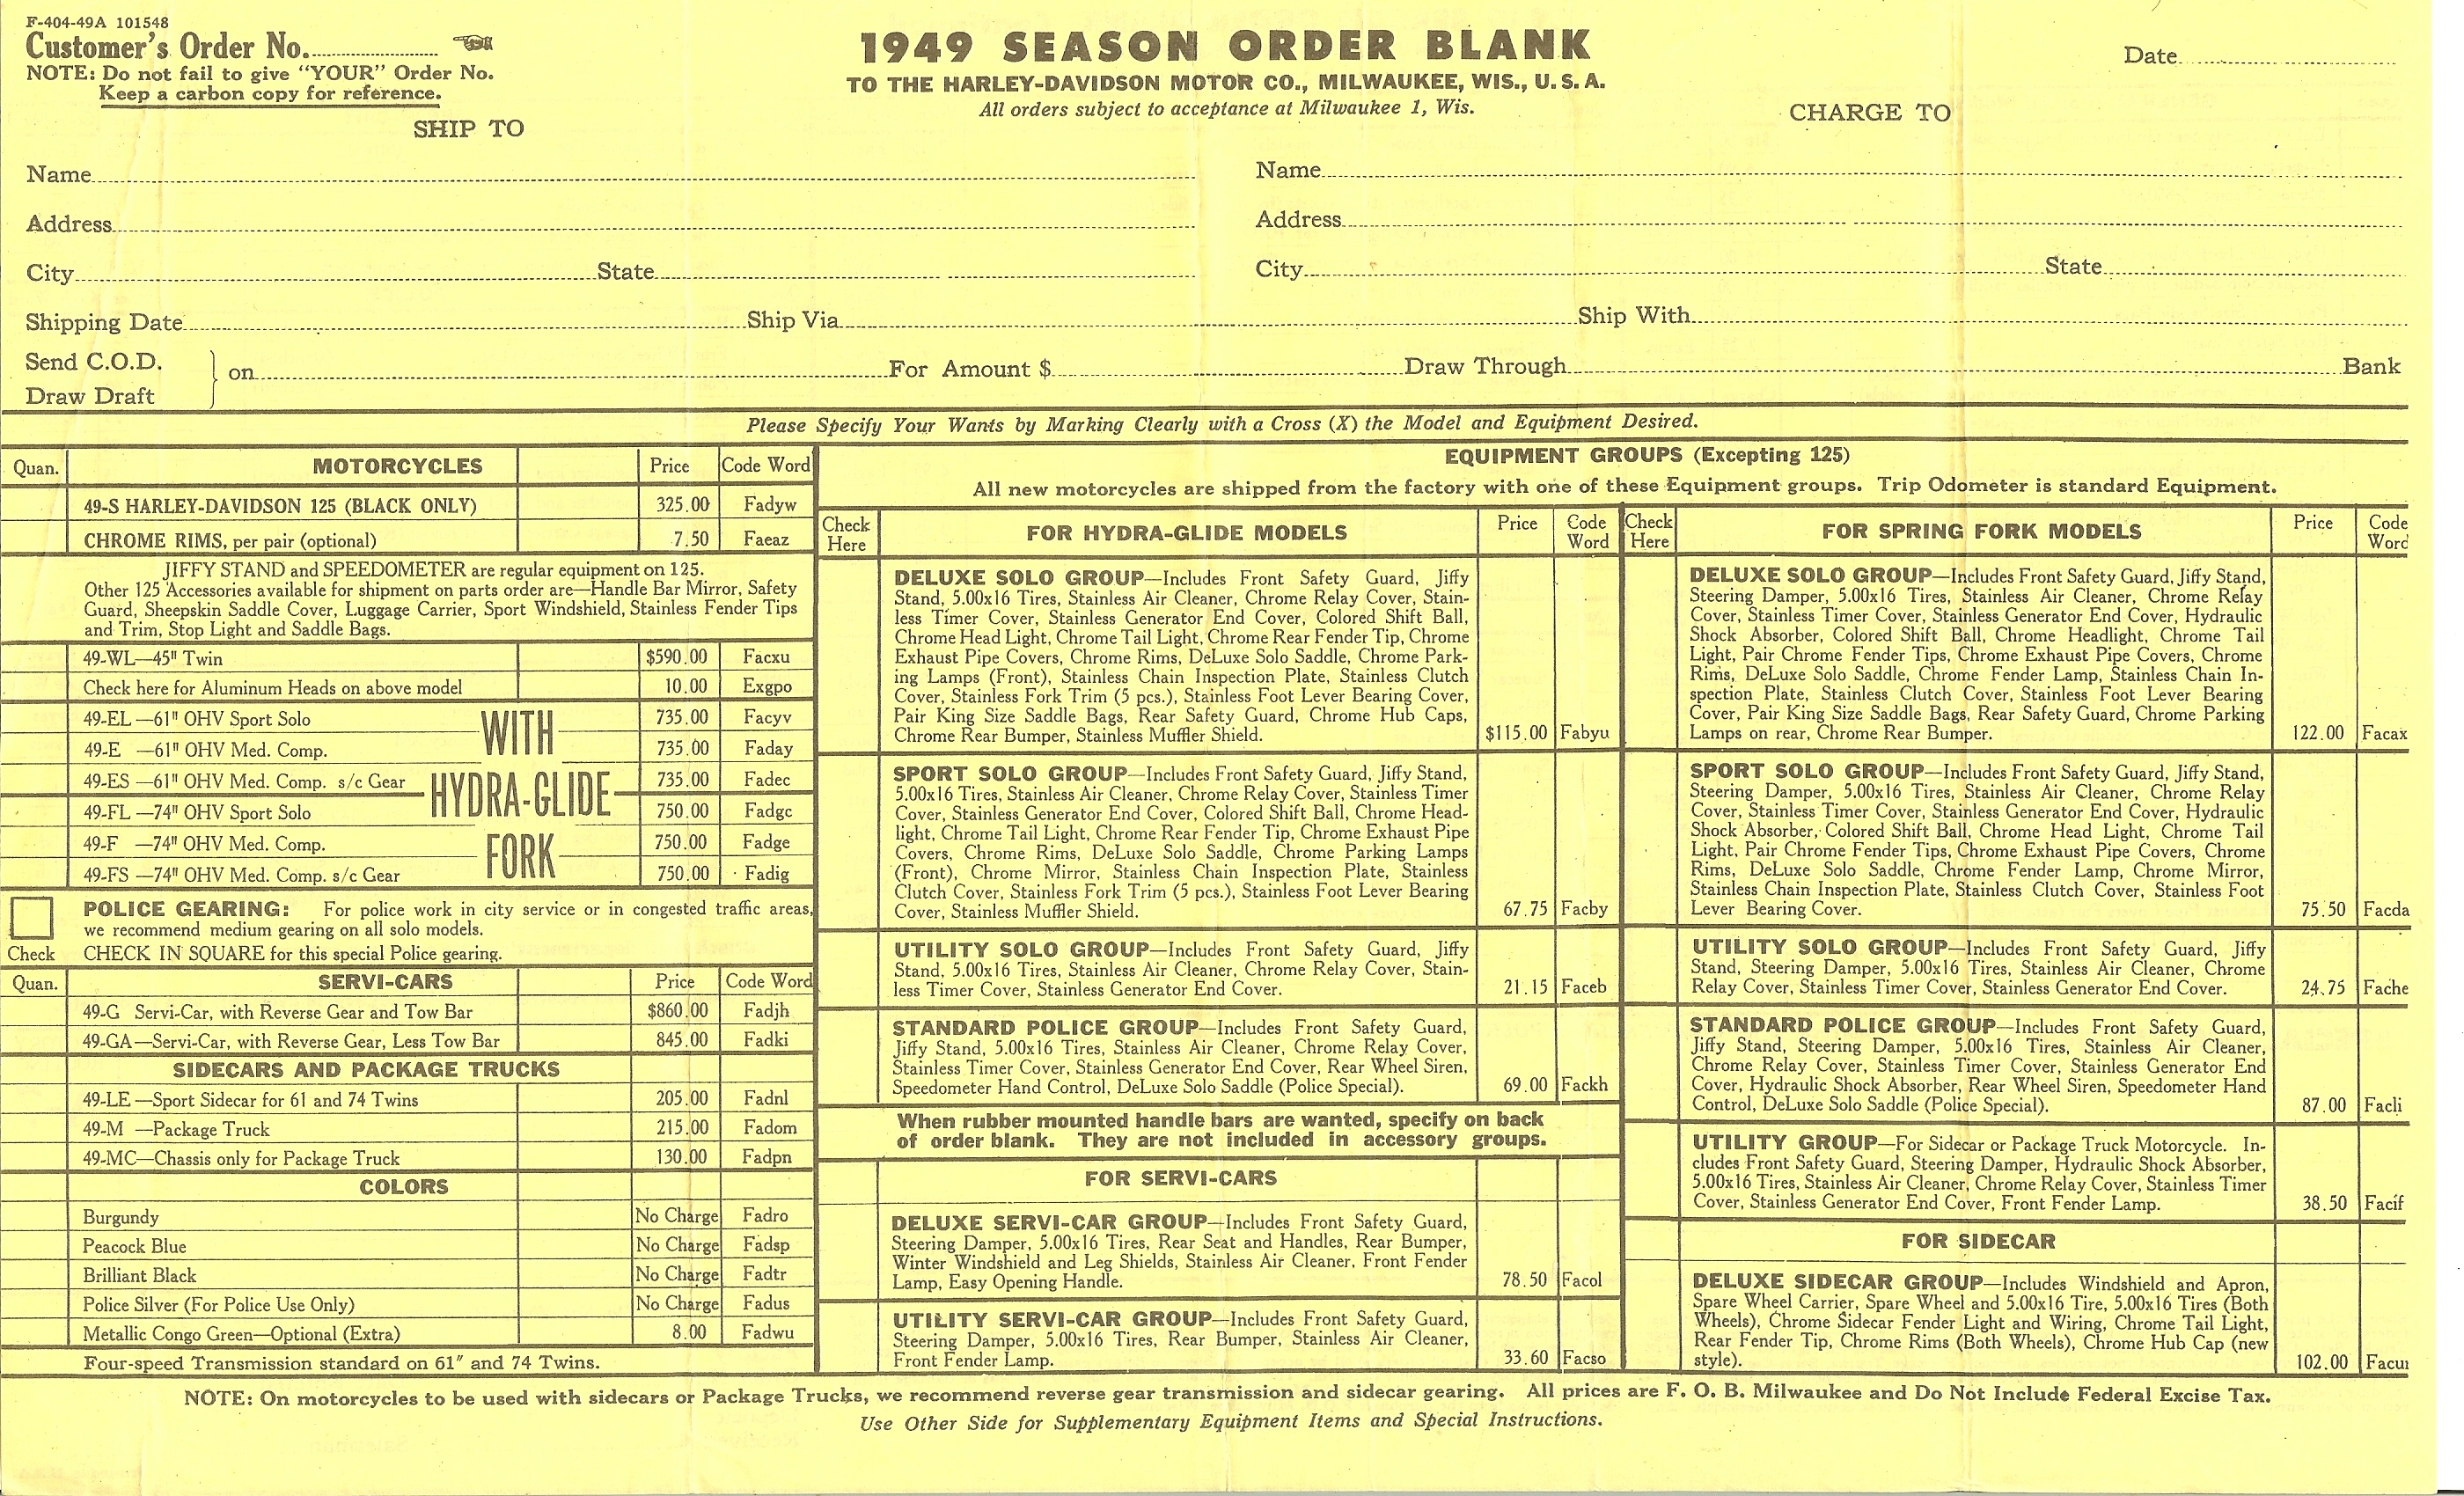 1949 order blank